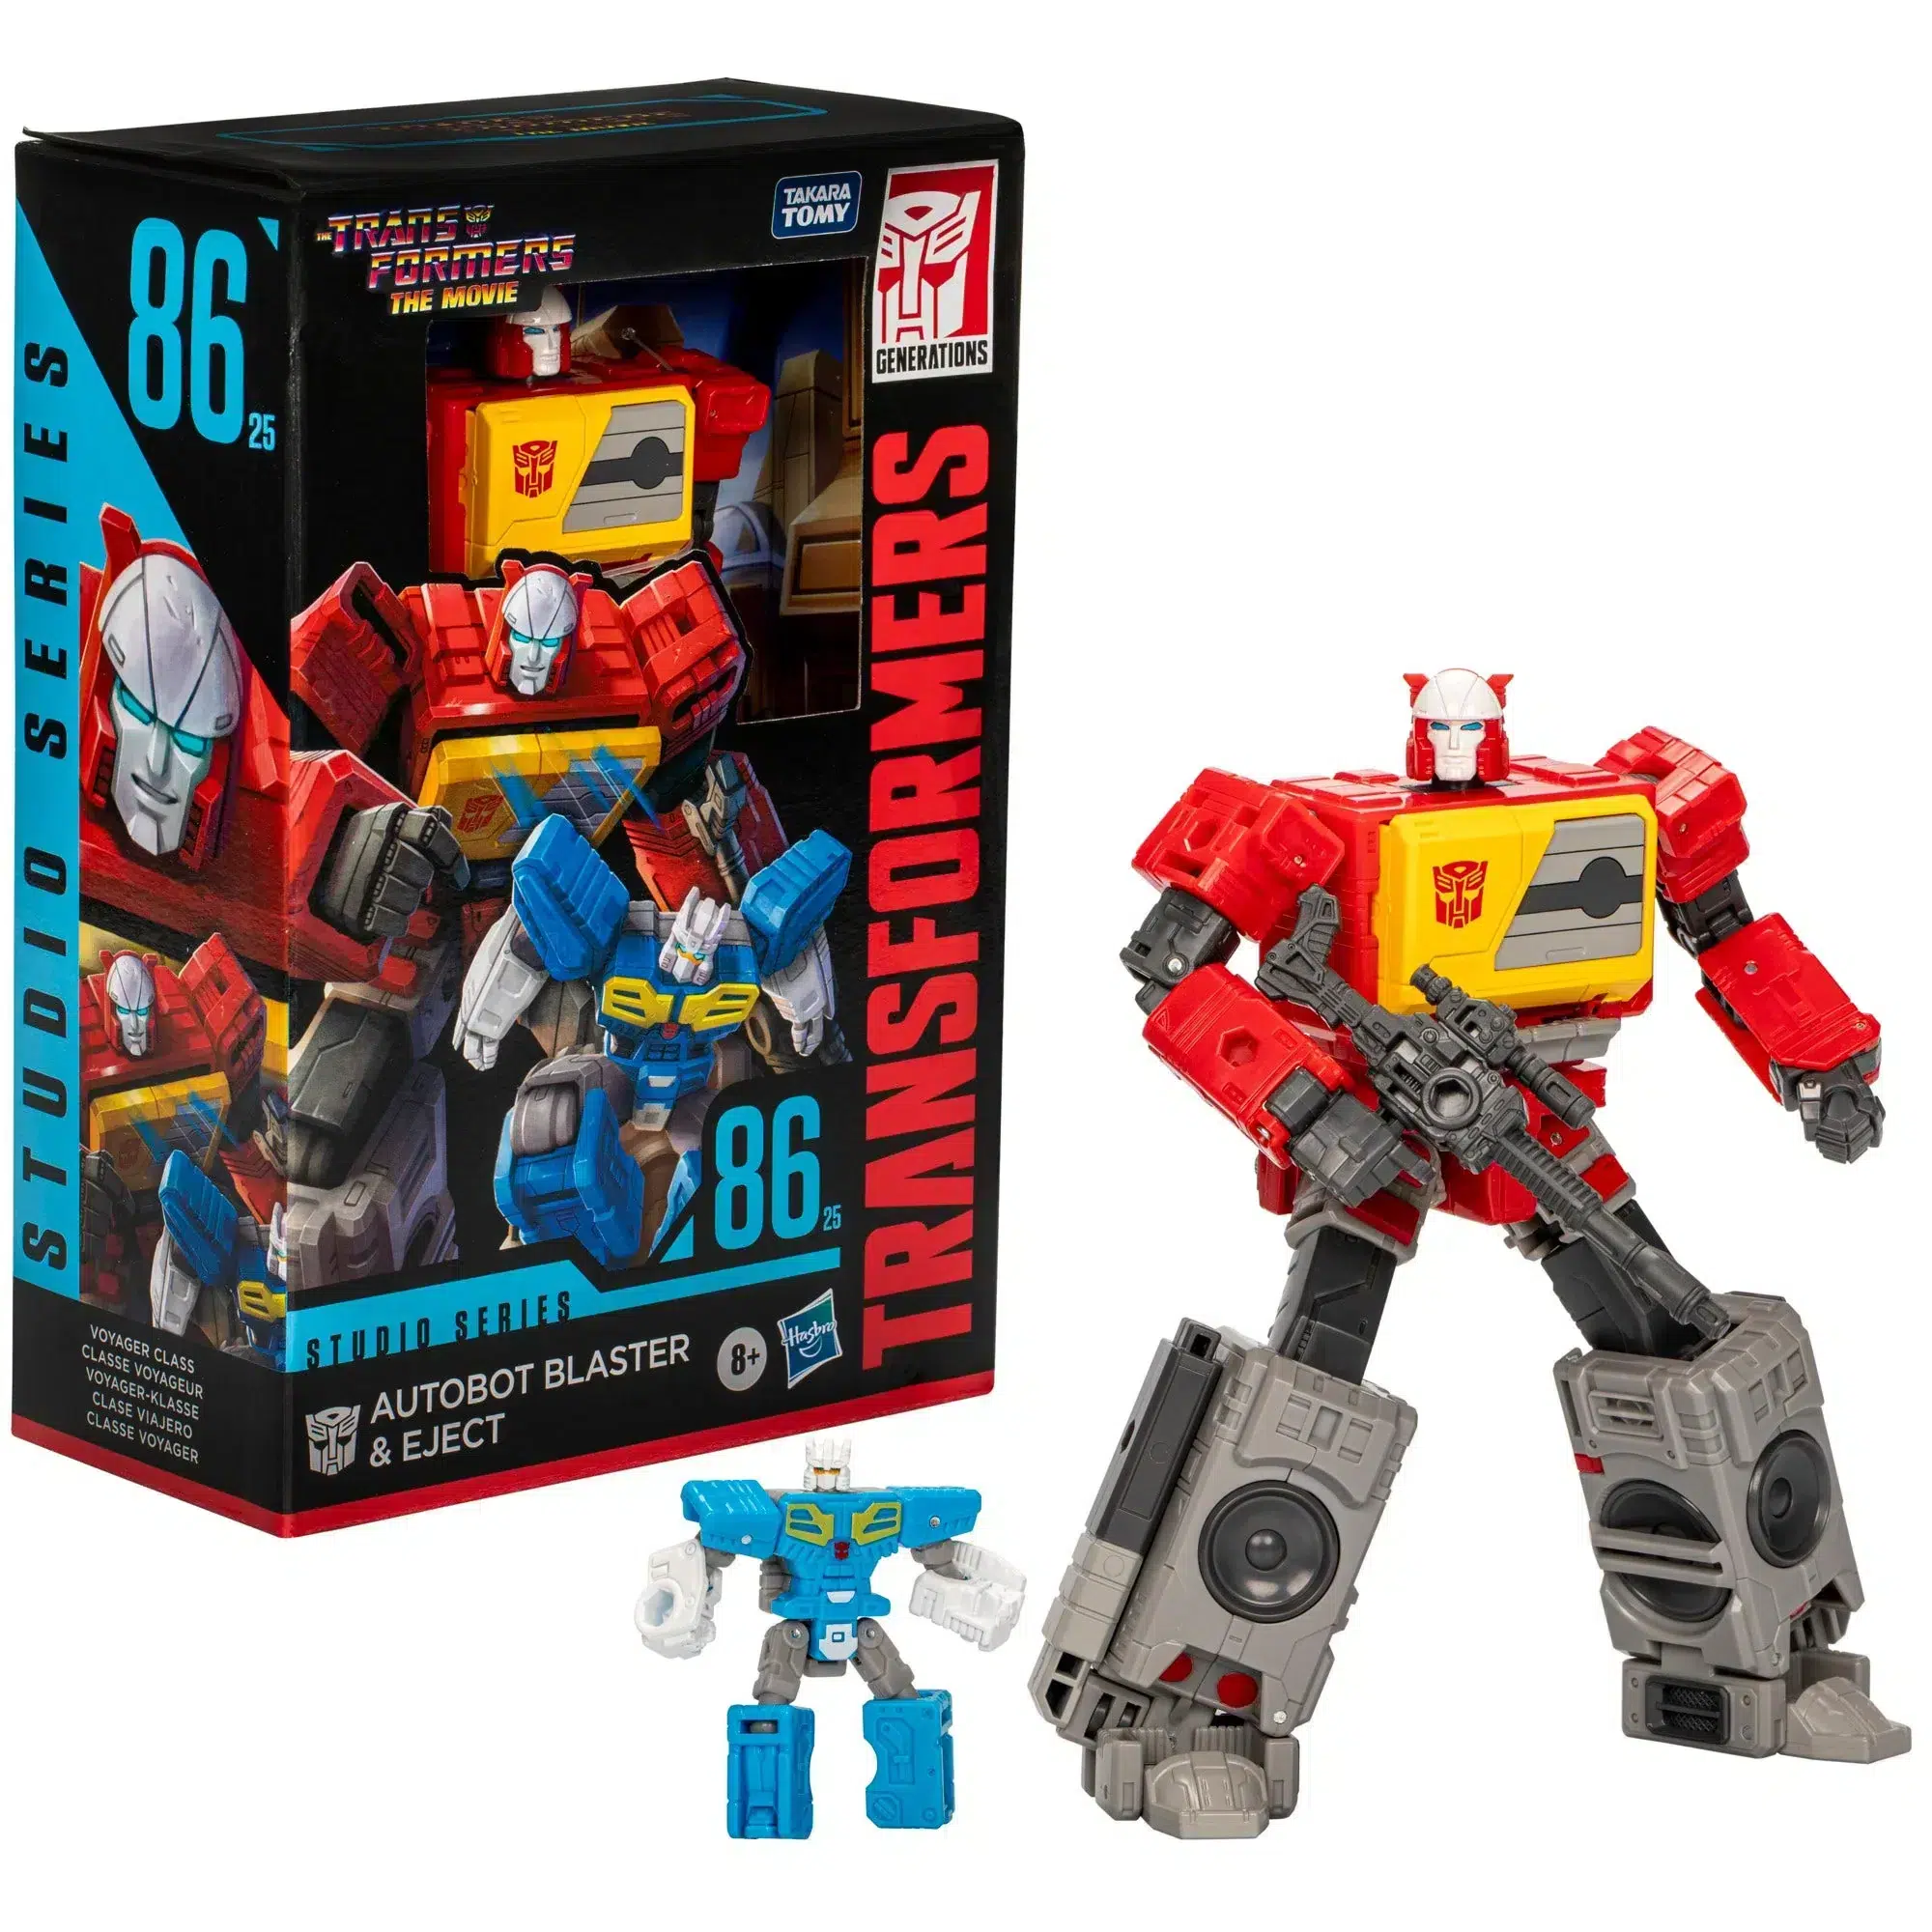 El Transformers La película Studio Series 86 25 Autobot Blaster Eject 3